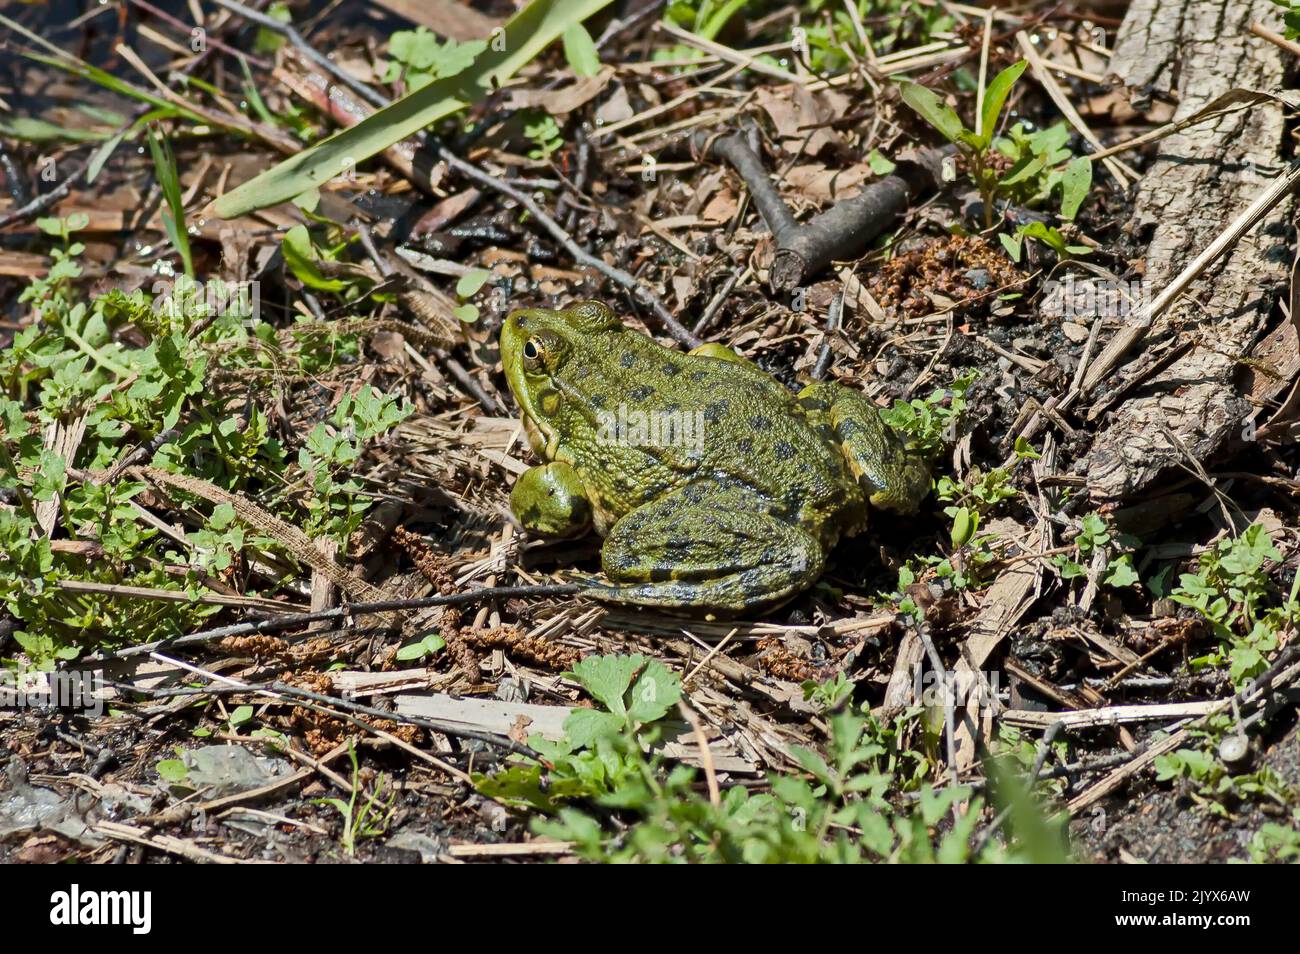 A green frog or rana, amphibian, basks in the sun in the park, Sofia, Bulgaria Stock Photo